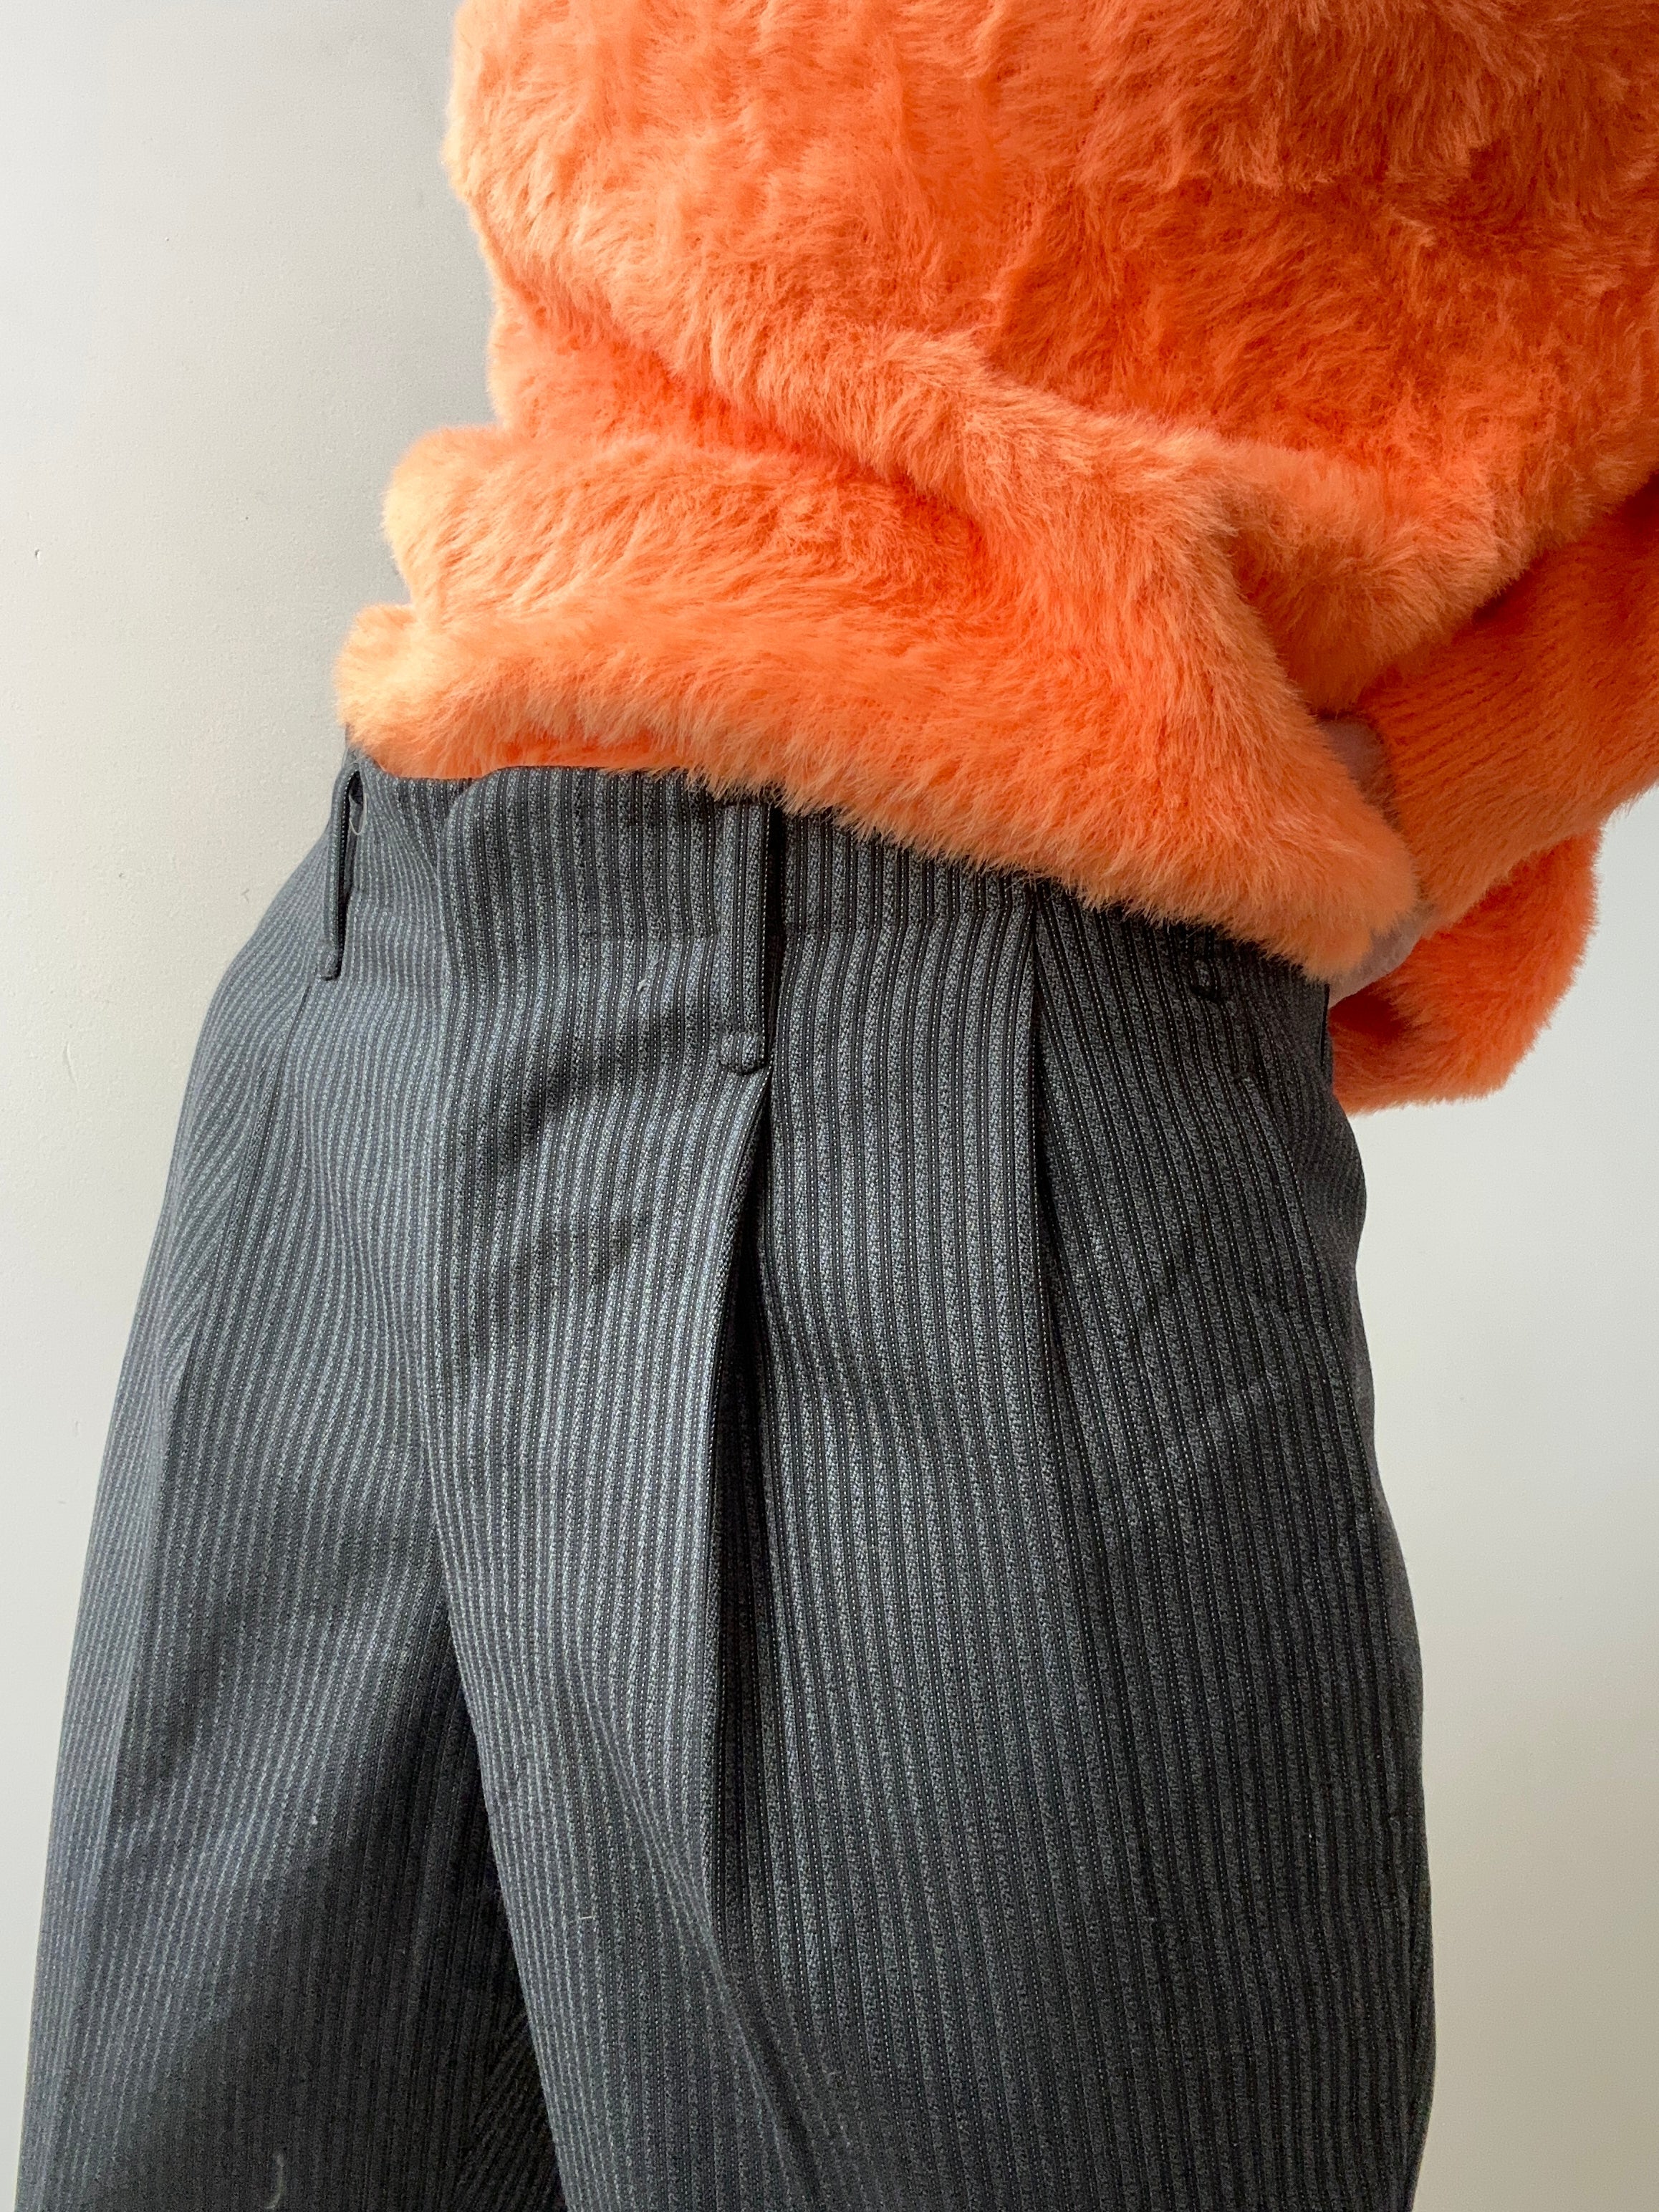 Future Nomads Pants Med-Large Japan Vintage Pants Navy Pinstripe